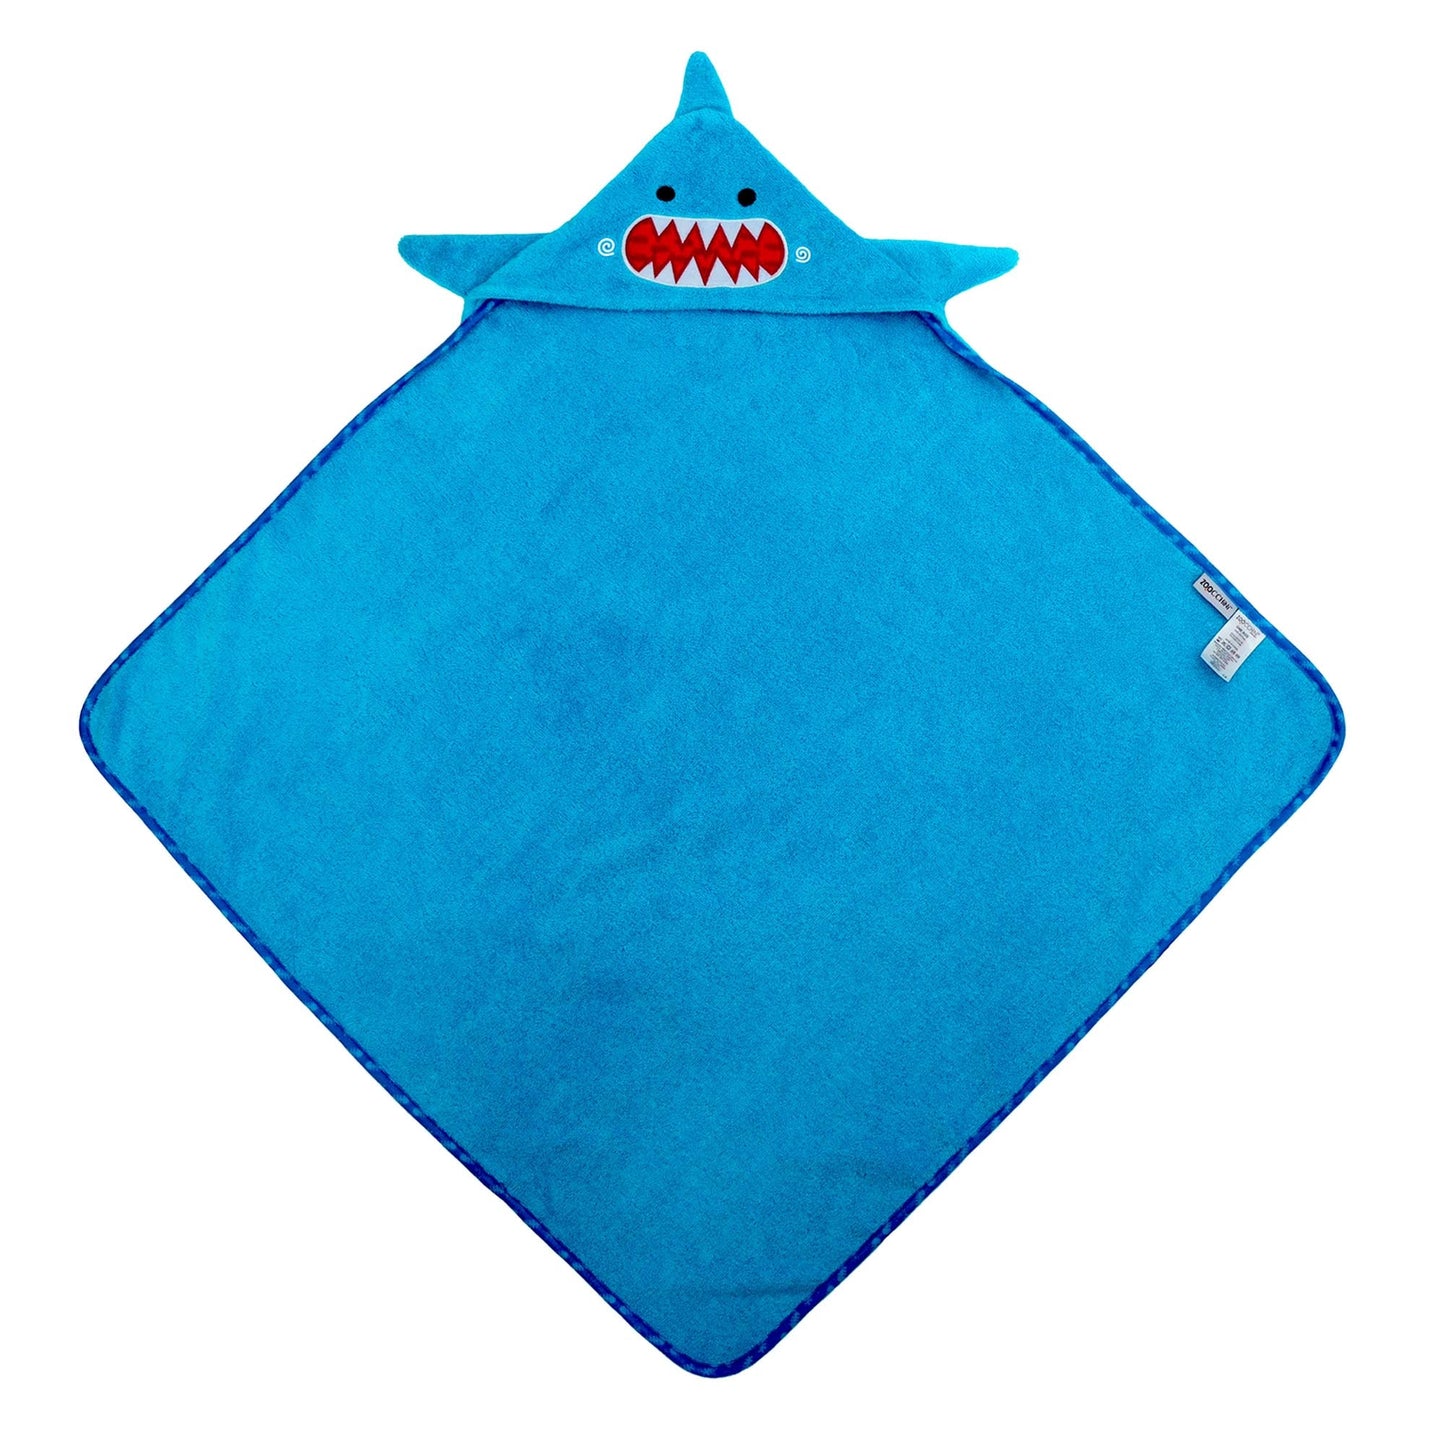 Zoocchini Baby Hooded Towel - Sherman the Shark